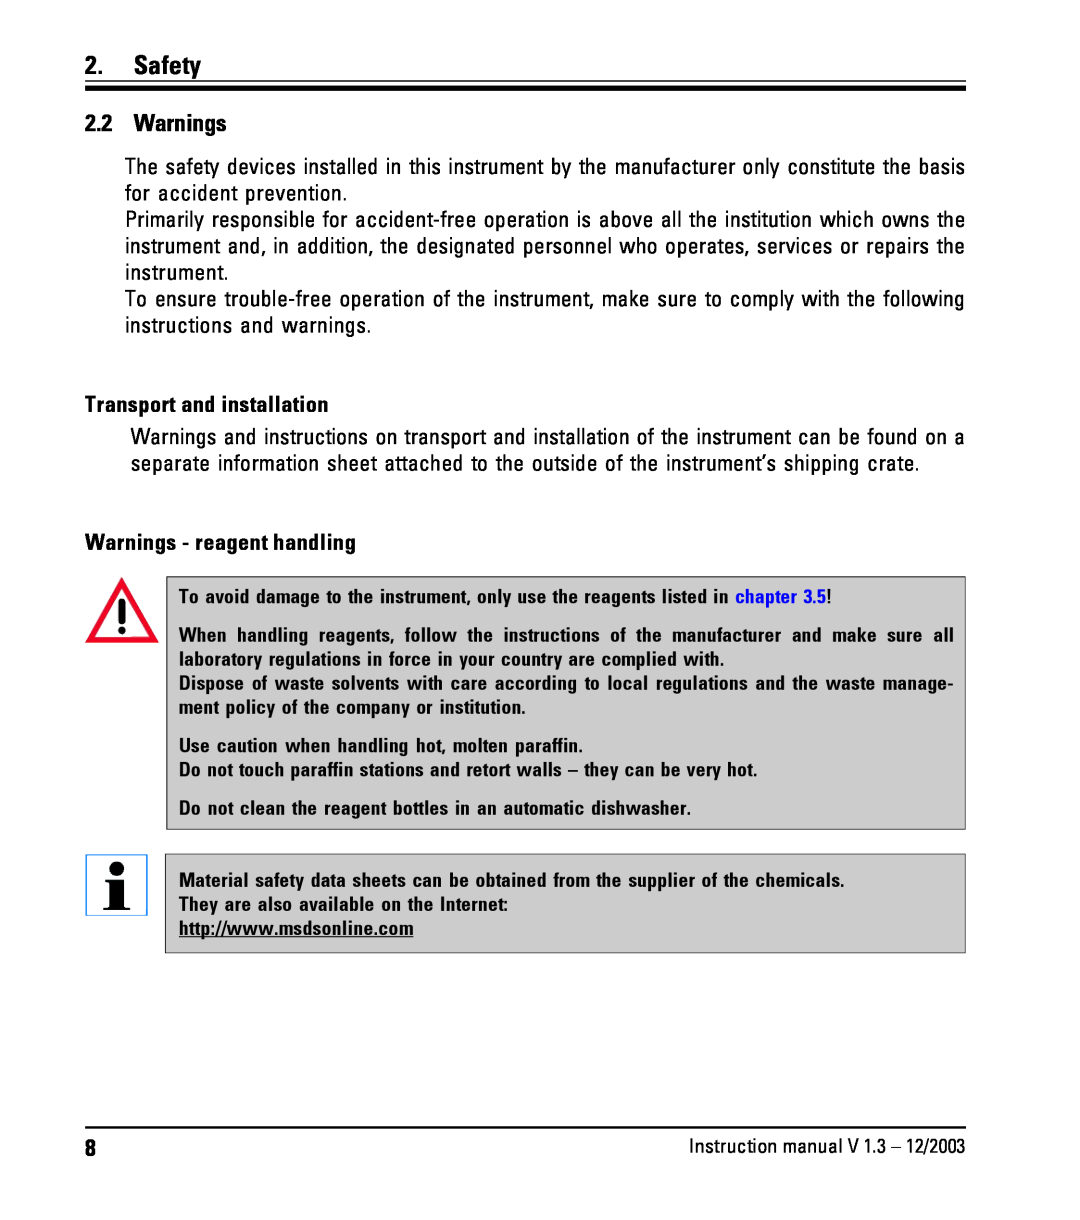 Leica ASP300 instruction manual Safety, Warnings 